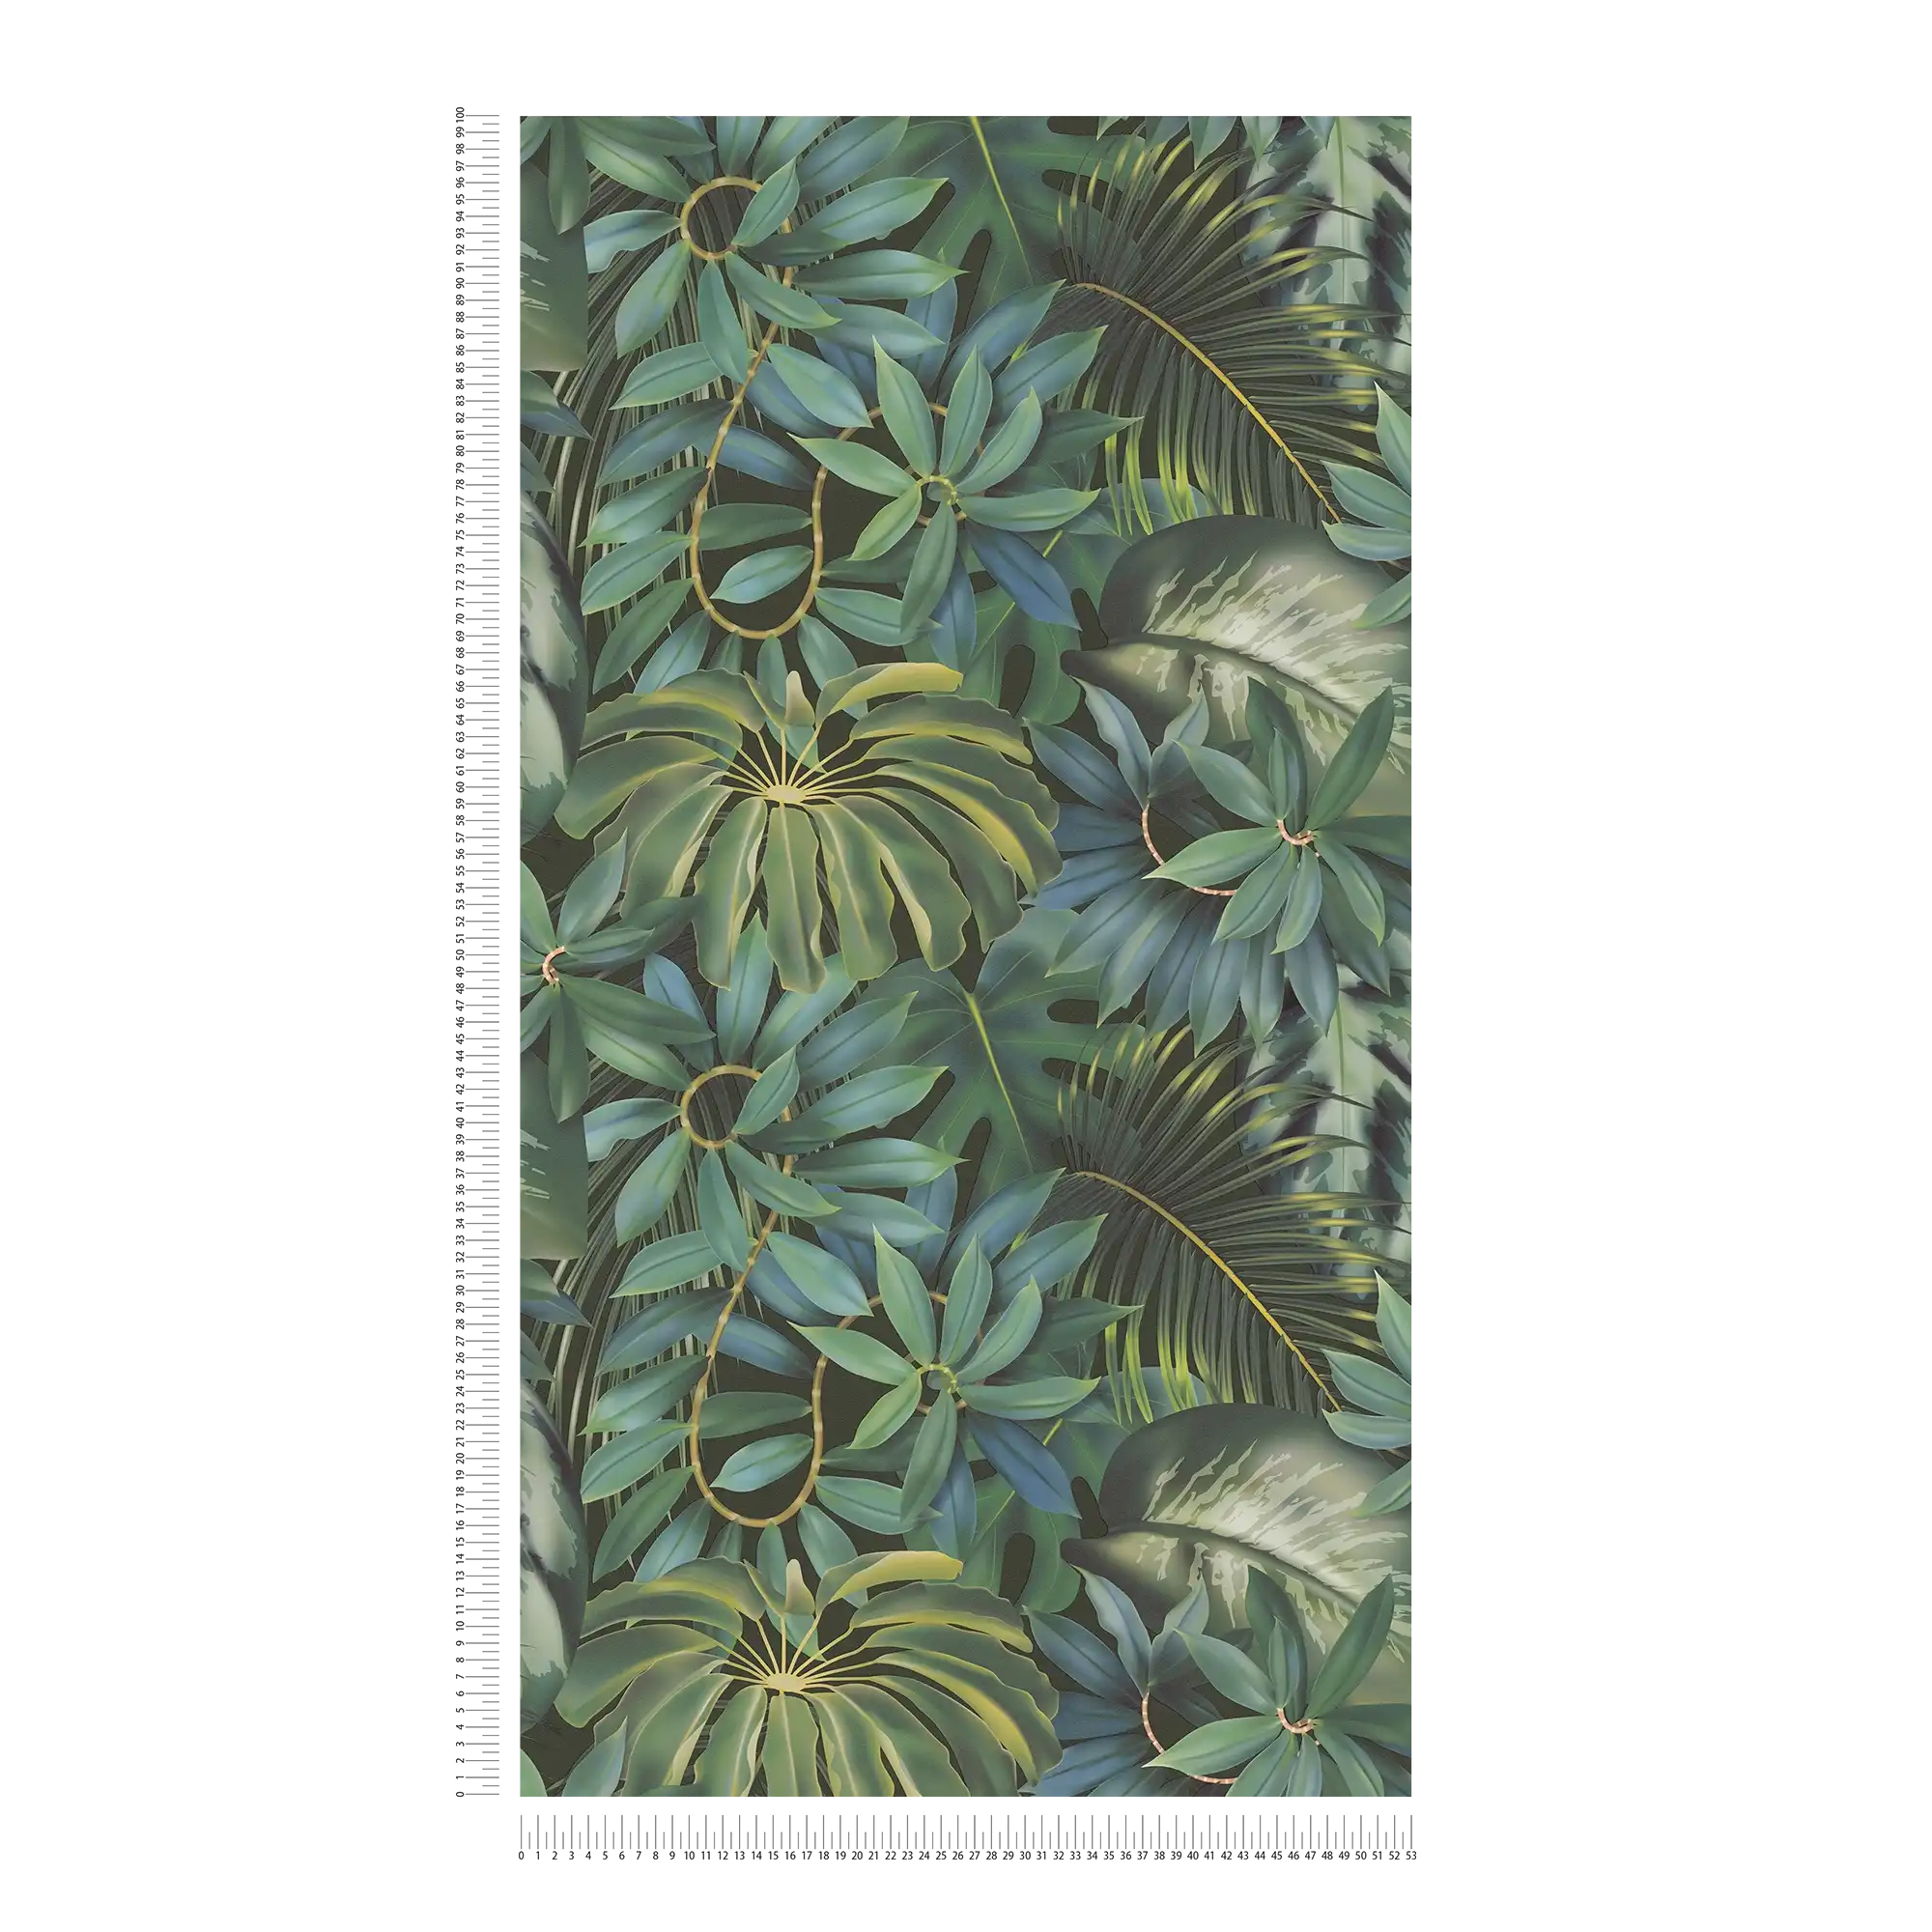             Leaves wallpaper jungle pattern - green, black
        